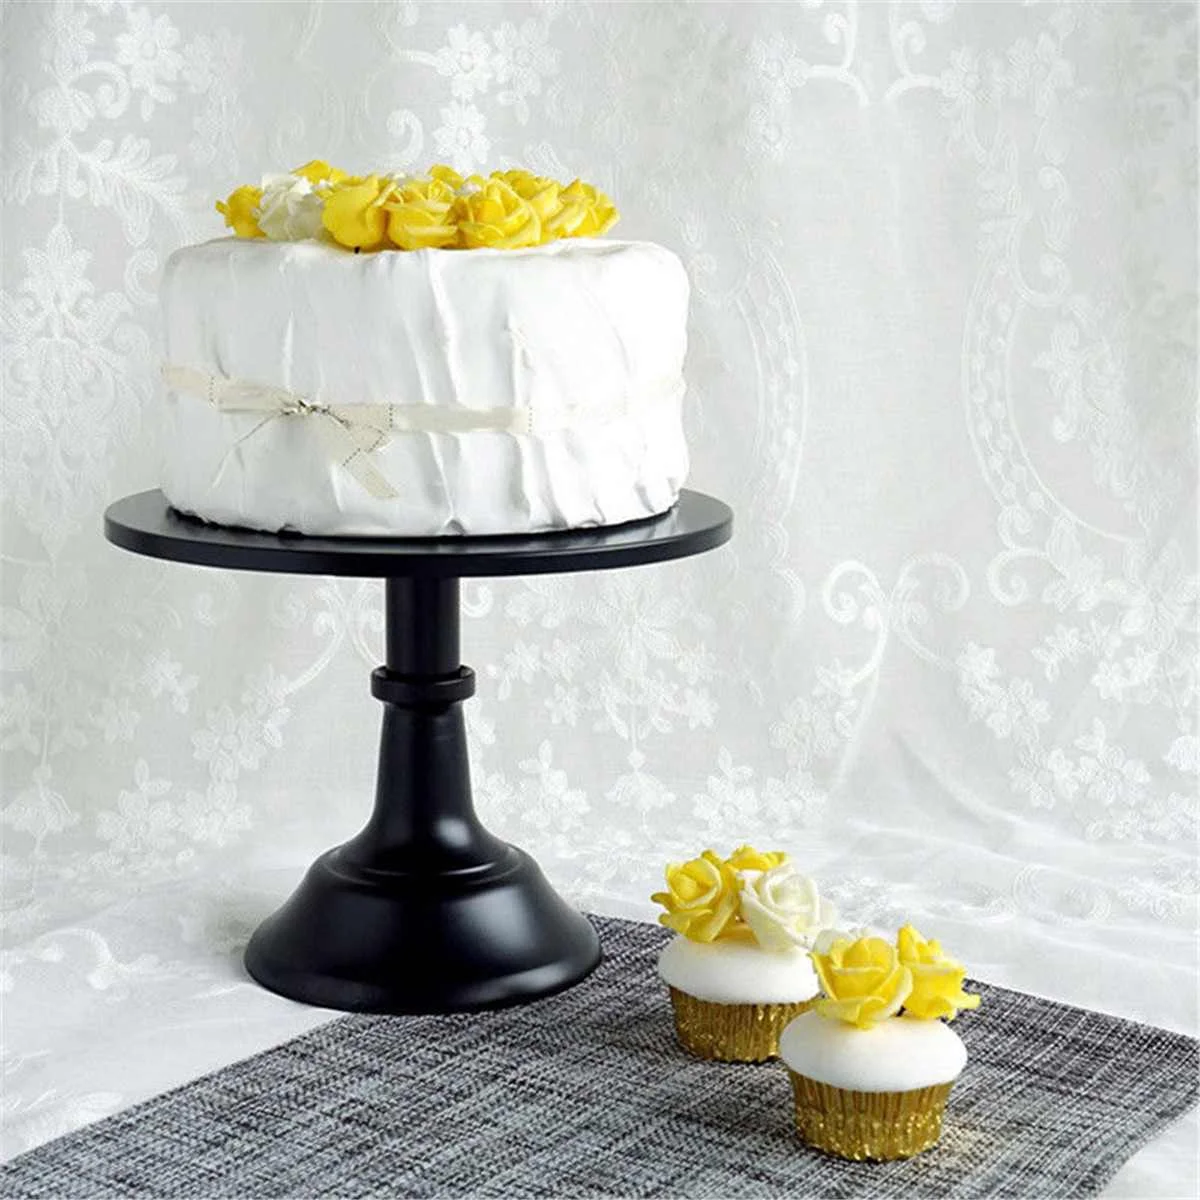 10 Inch Round Cake Stand Pedestal Black Dessert Holder Exquisite Metal Iron Cake Rack Base Wedding Party Birthday Cupcake Holder